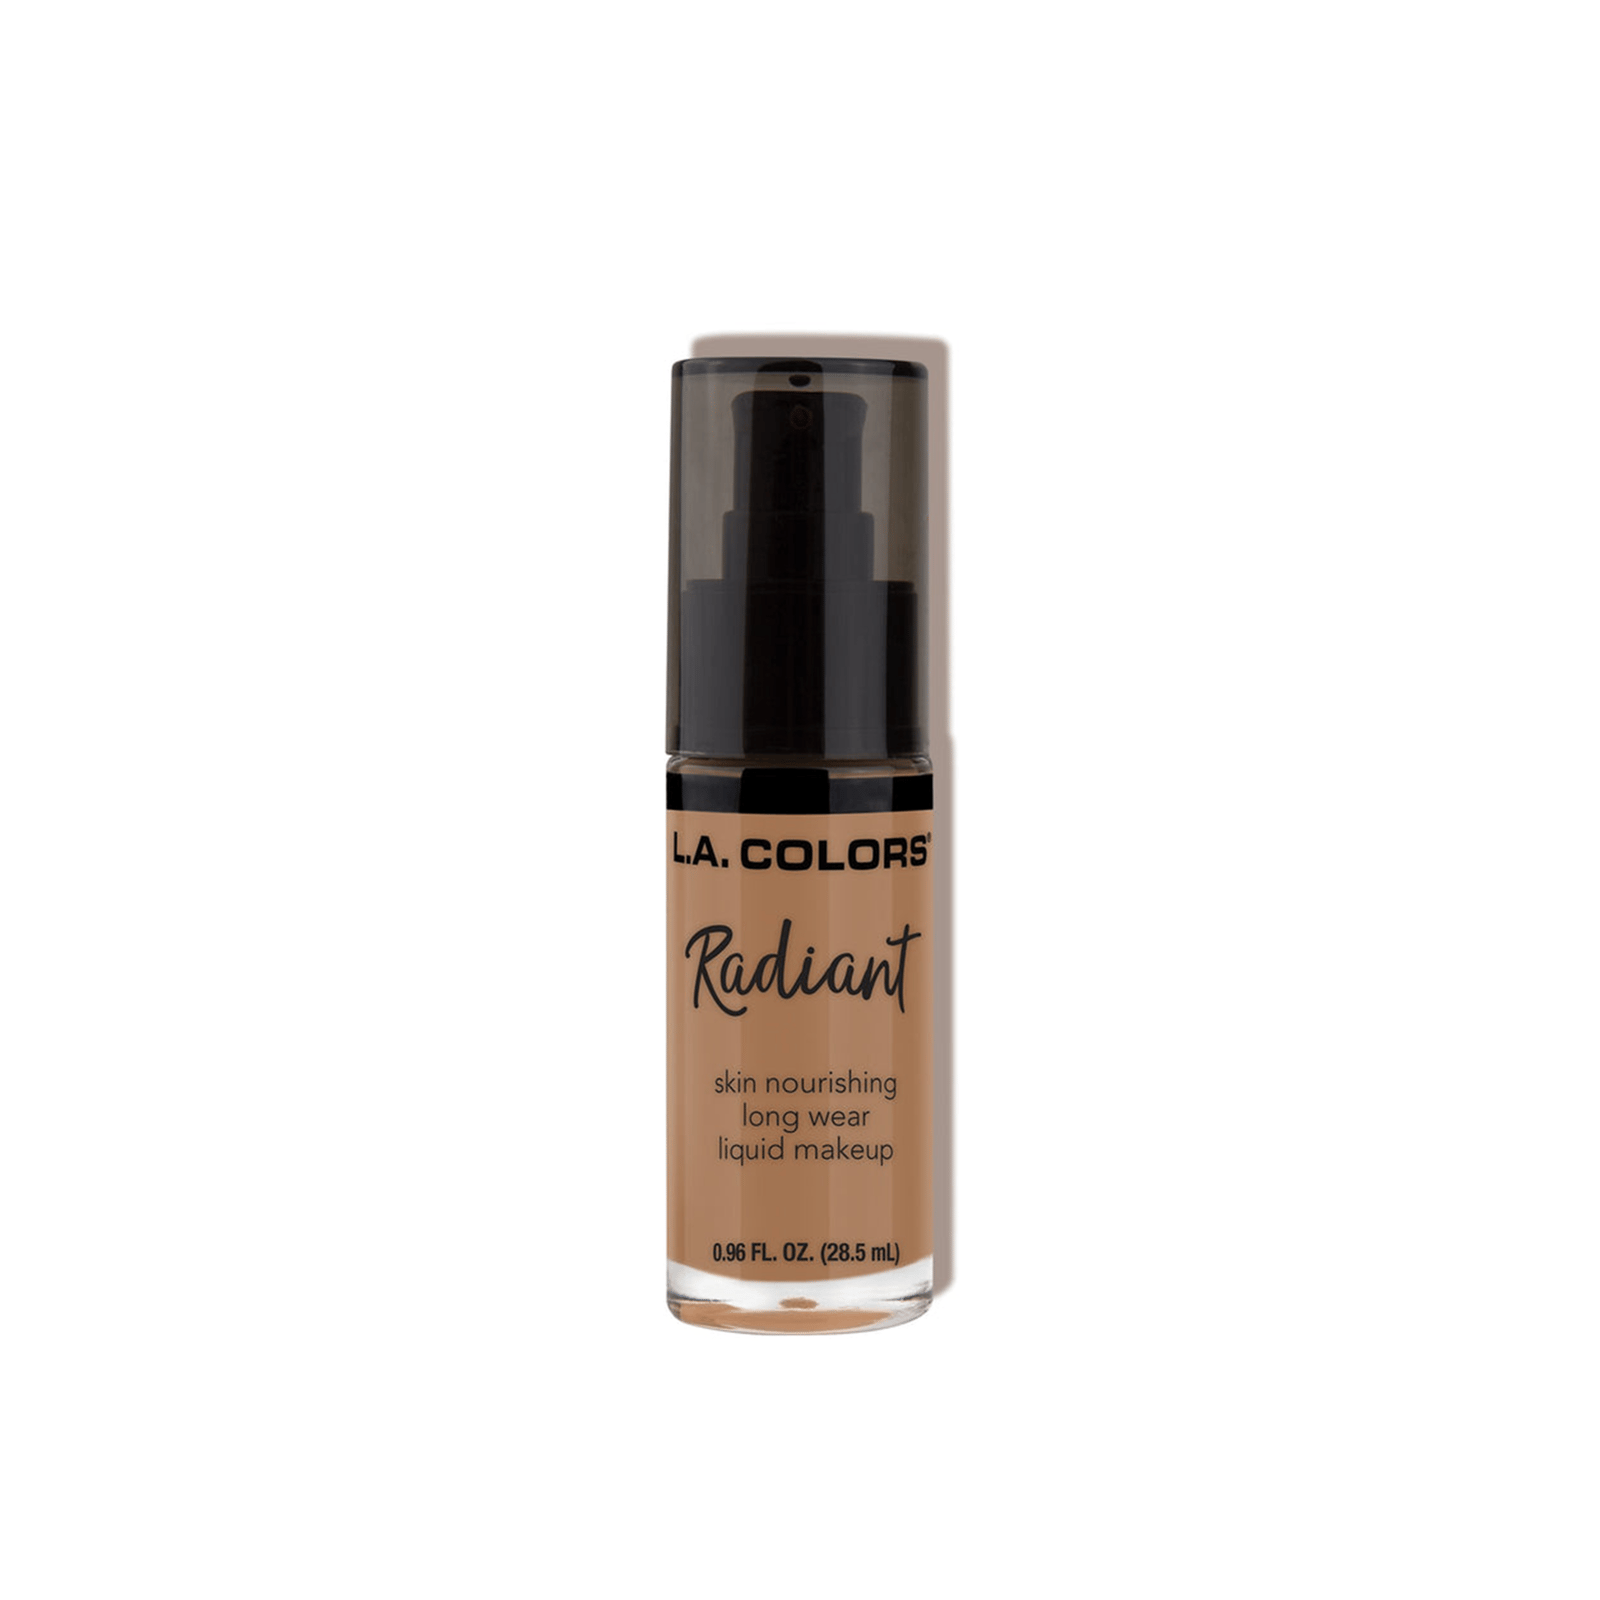 L.A. Colors Radiant Liquid Makeup Foundation CLM395 Creamy Café 28.5ml